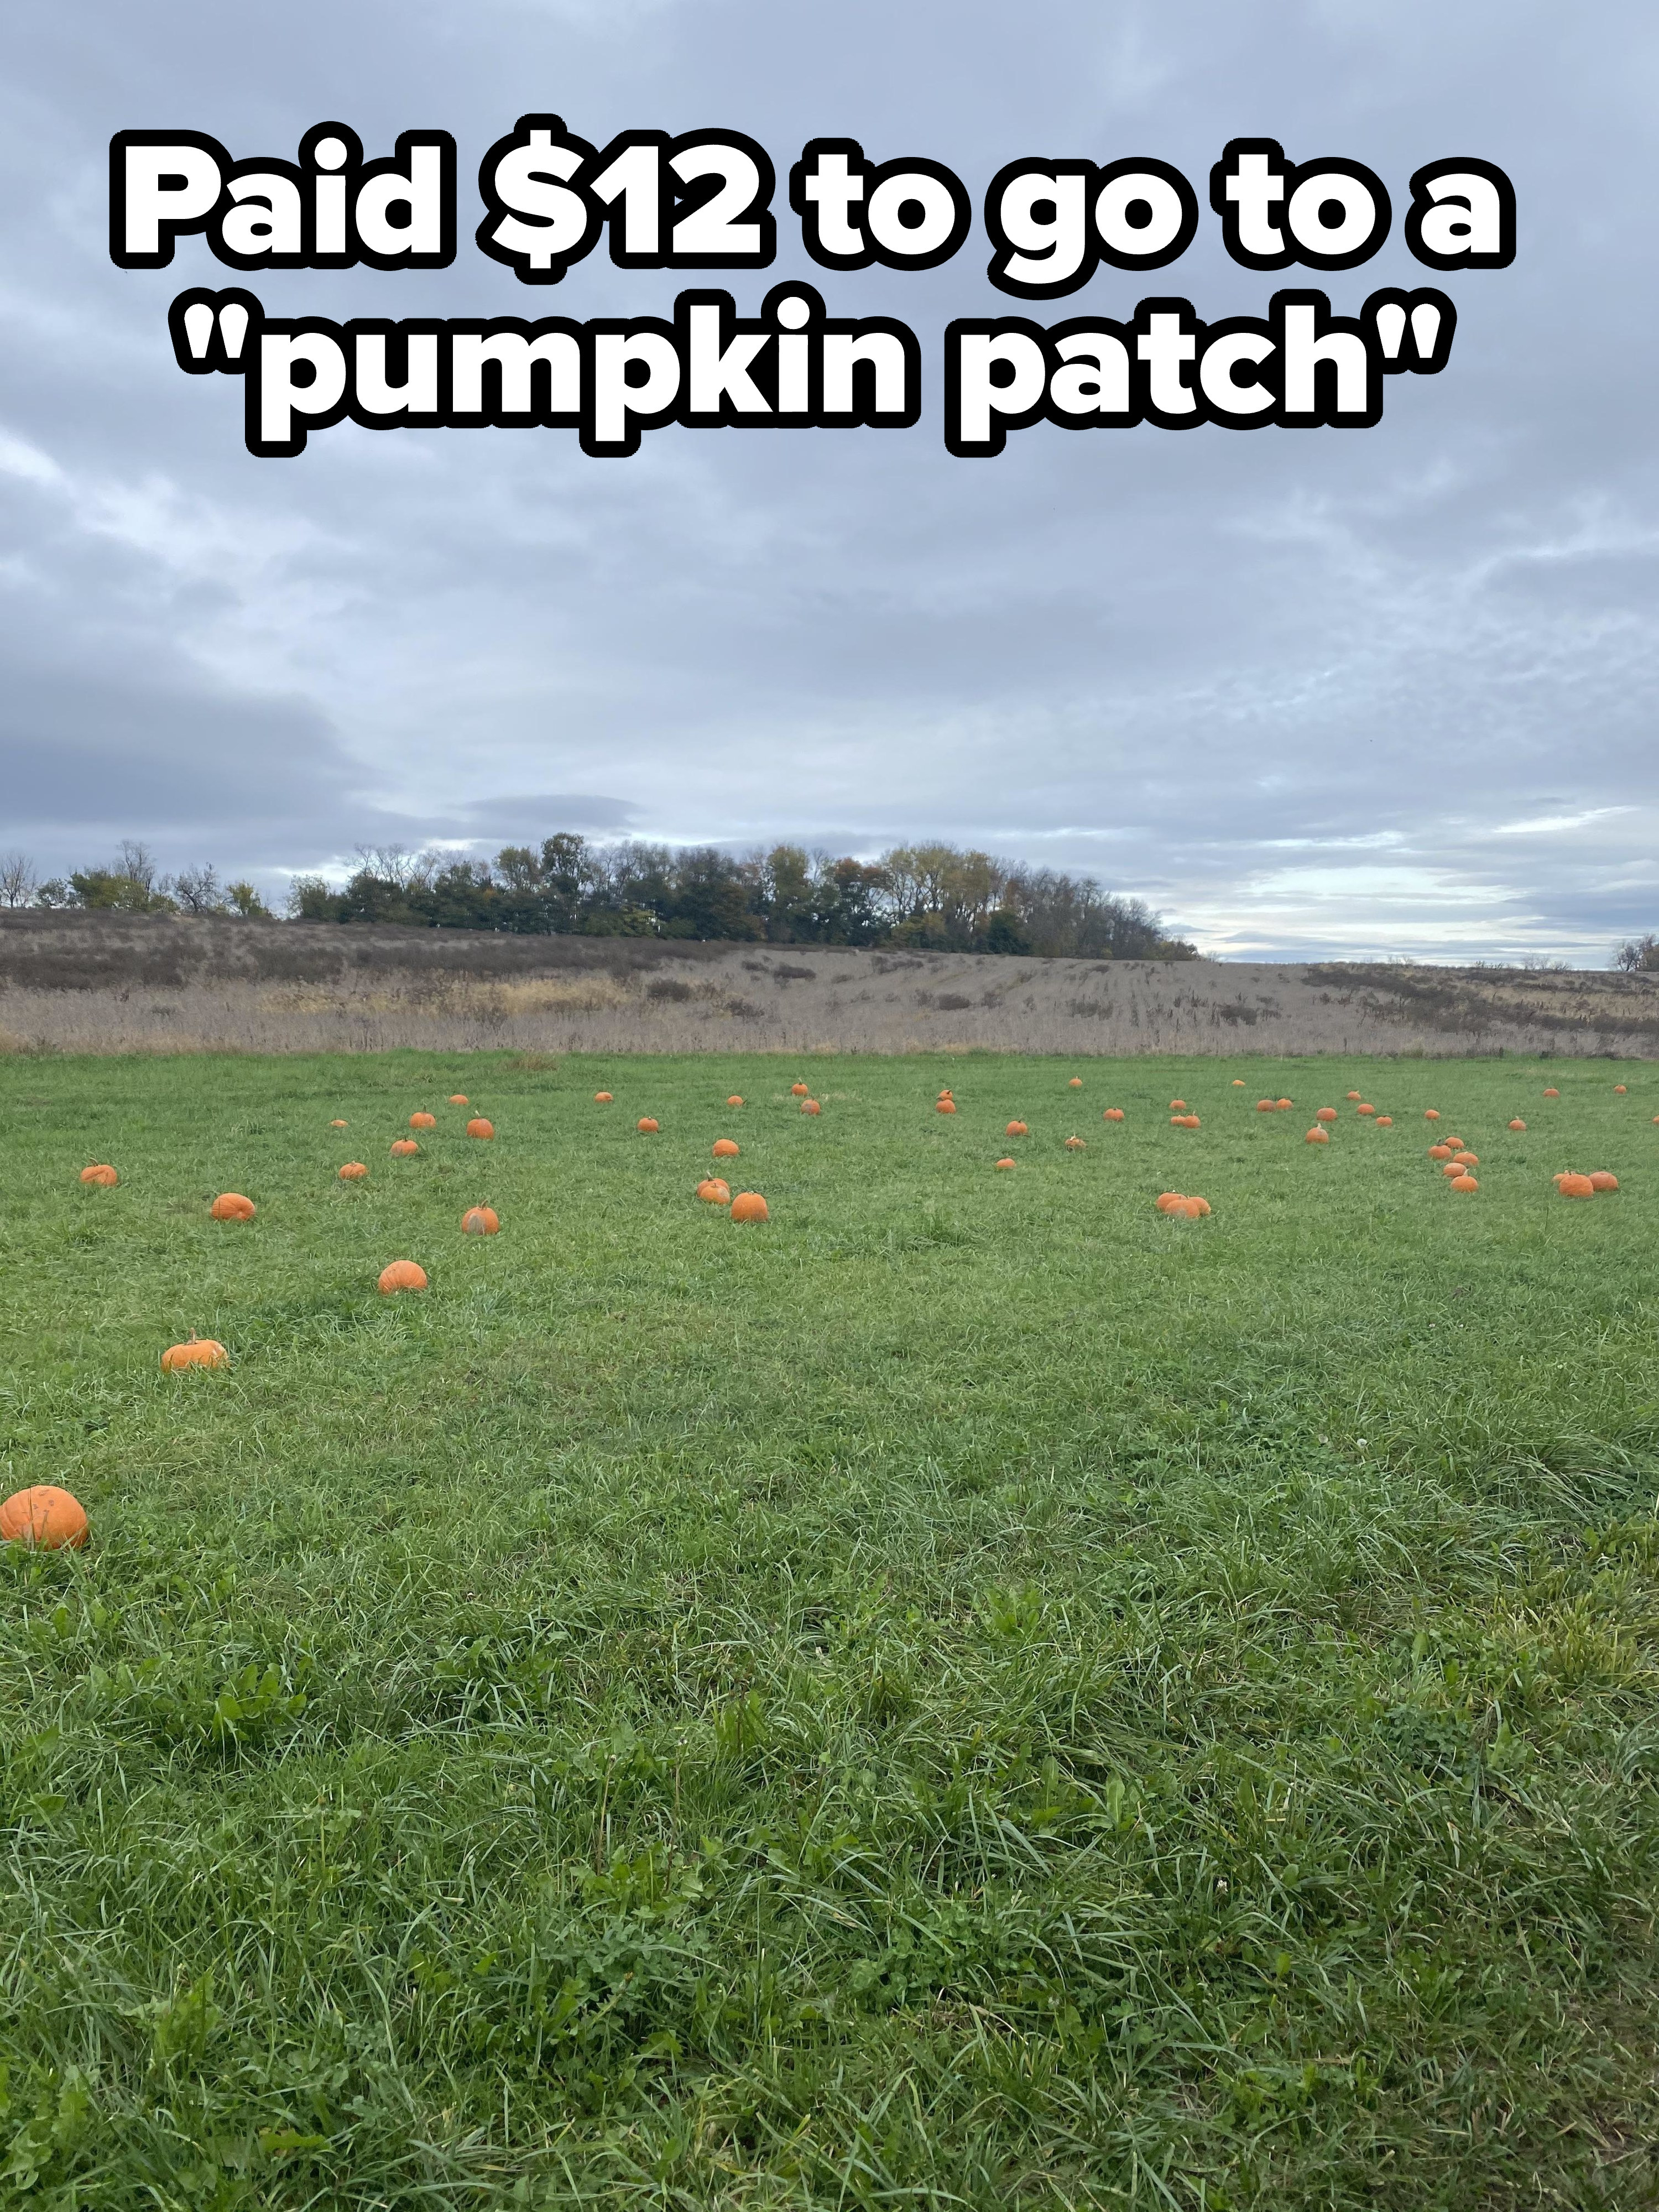 A sparse pumpkin patch